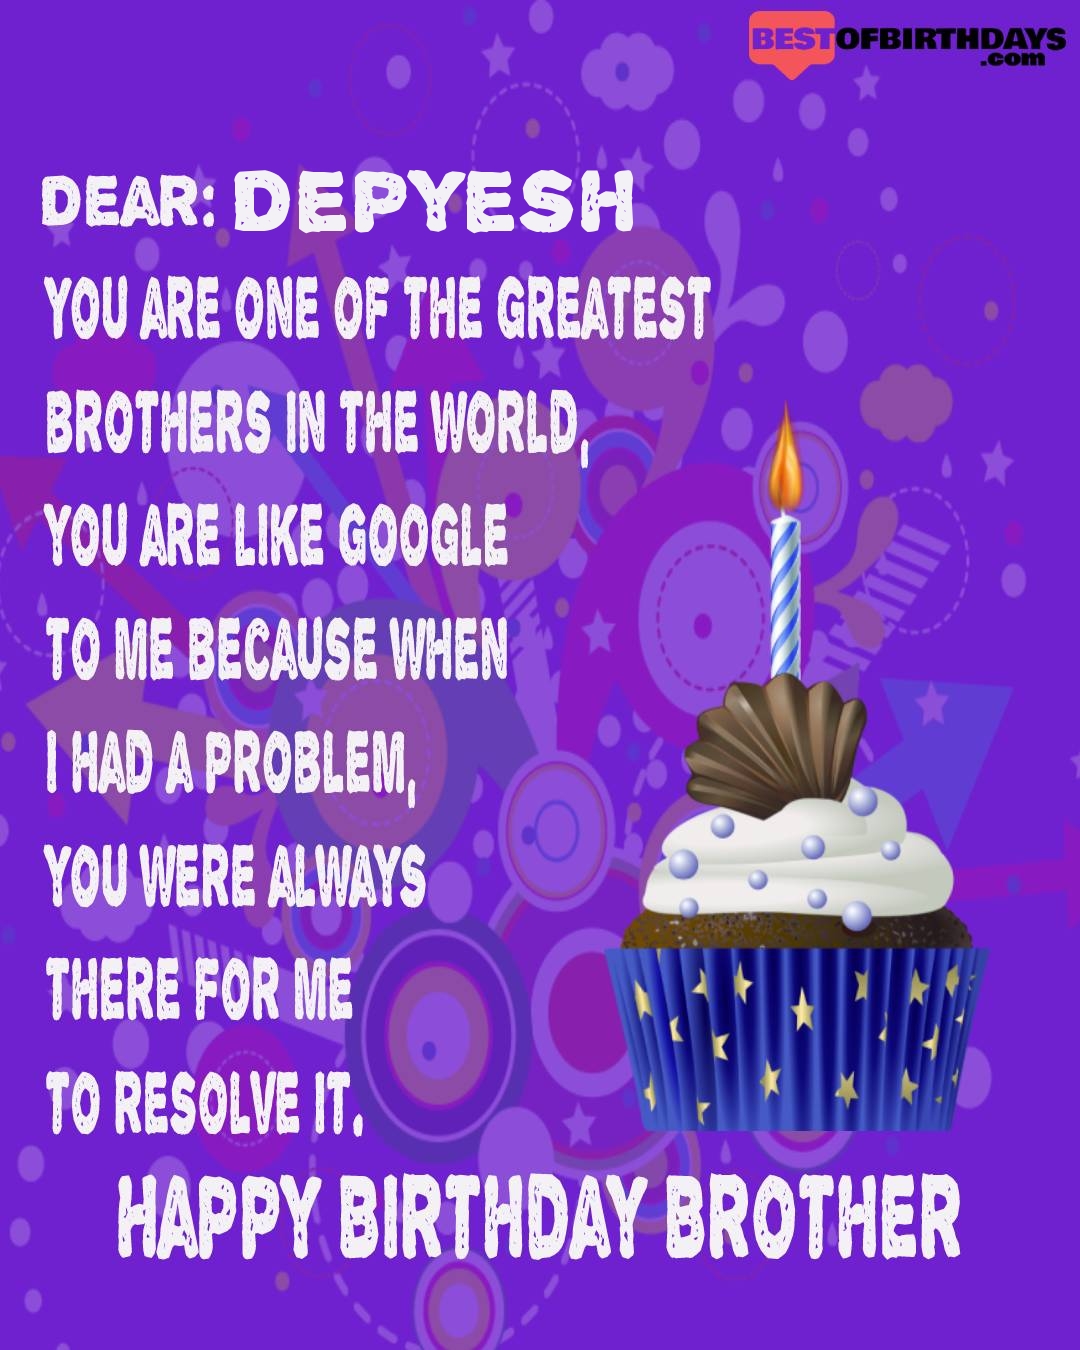 Happy birthday depyesh bhai brother bro